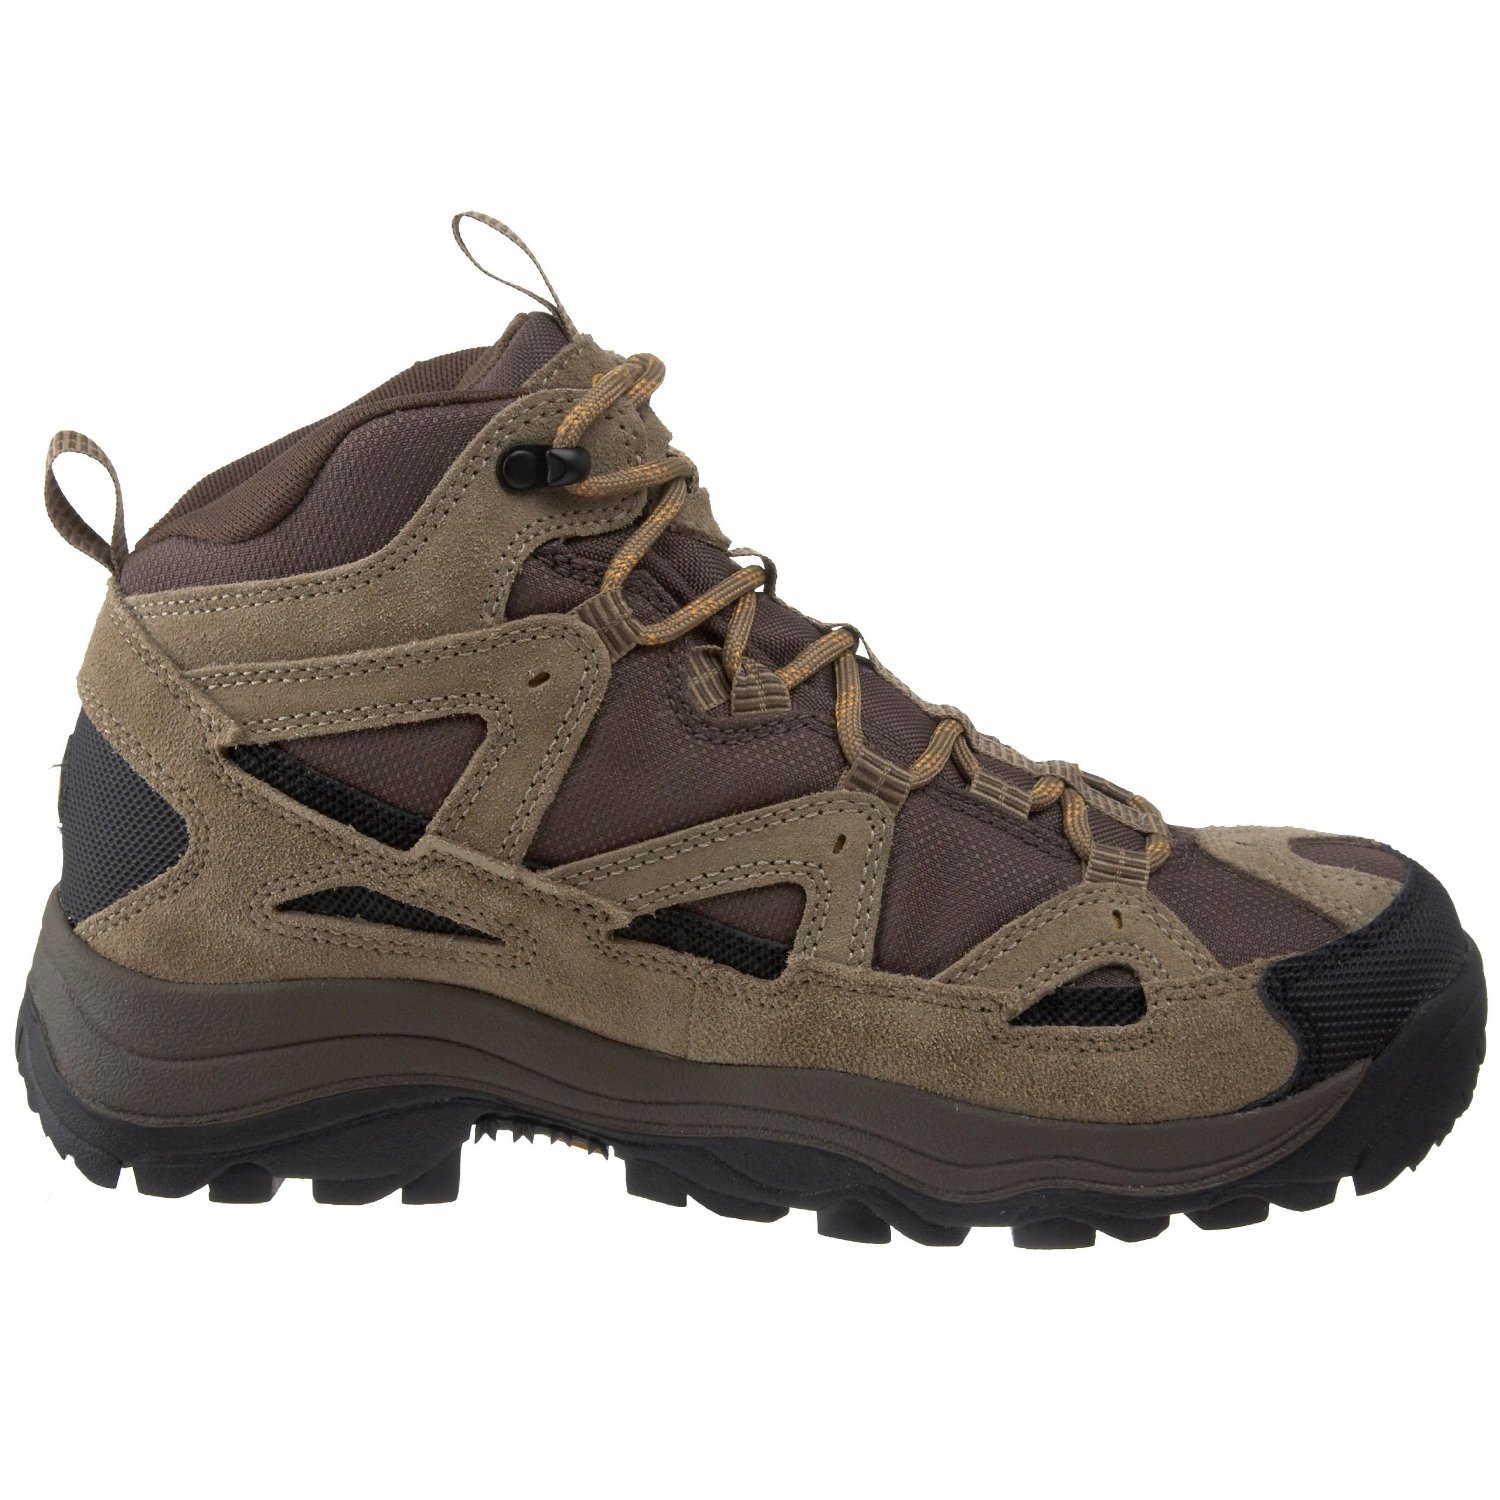 Hiking Shoes Here: Columbia Men's Coremic Ridge 2 Hiking Boot,Espresso ...